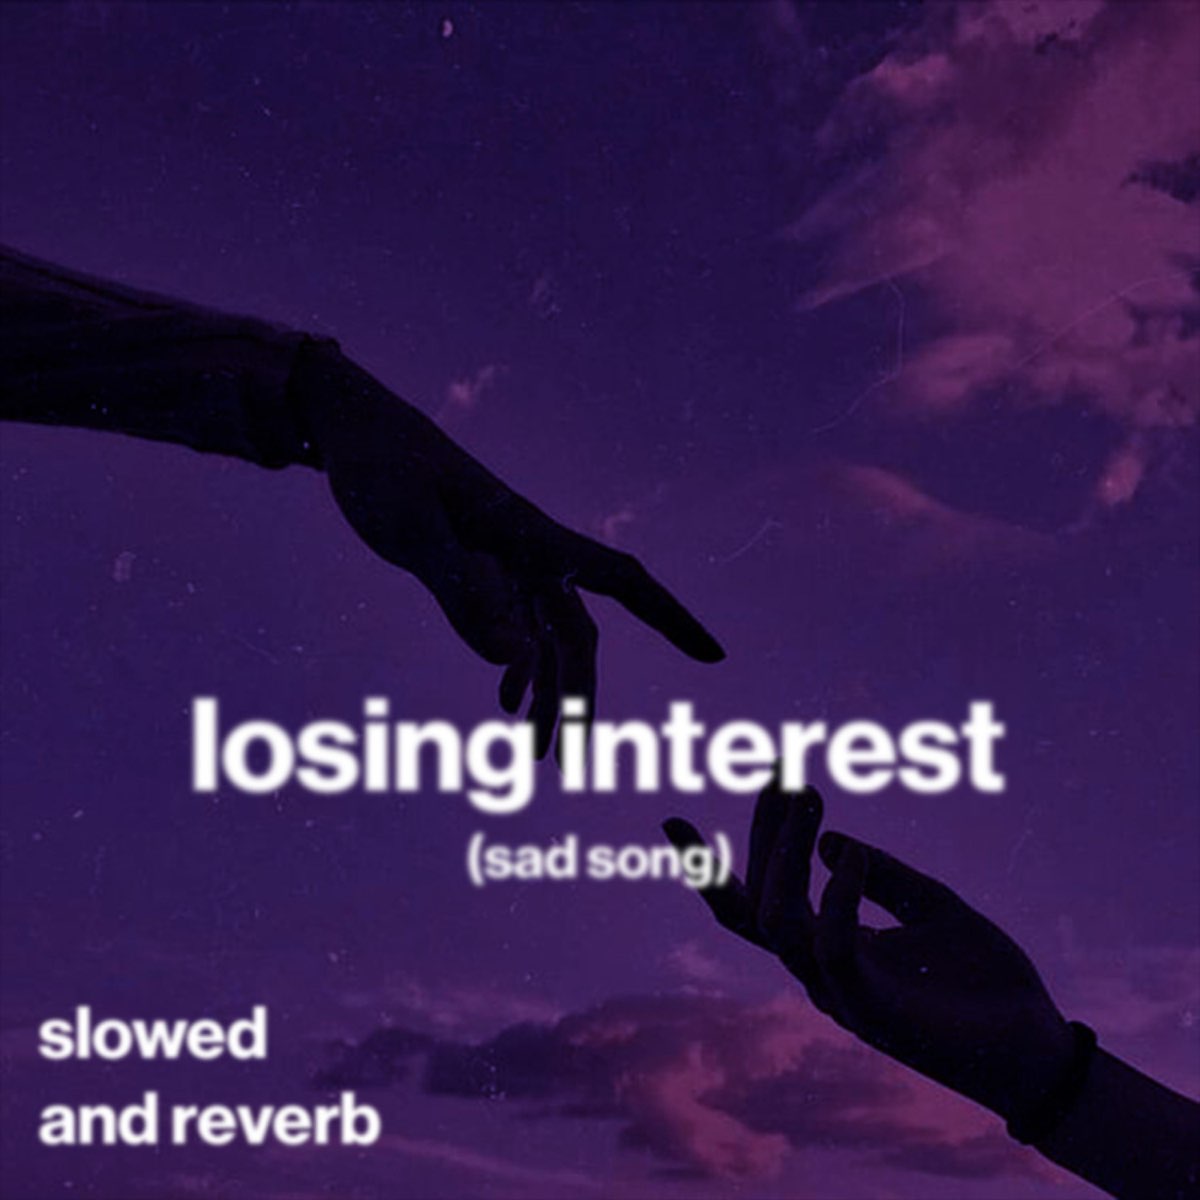 Losing interest